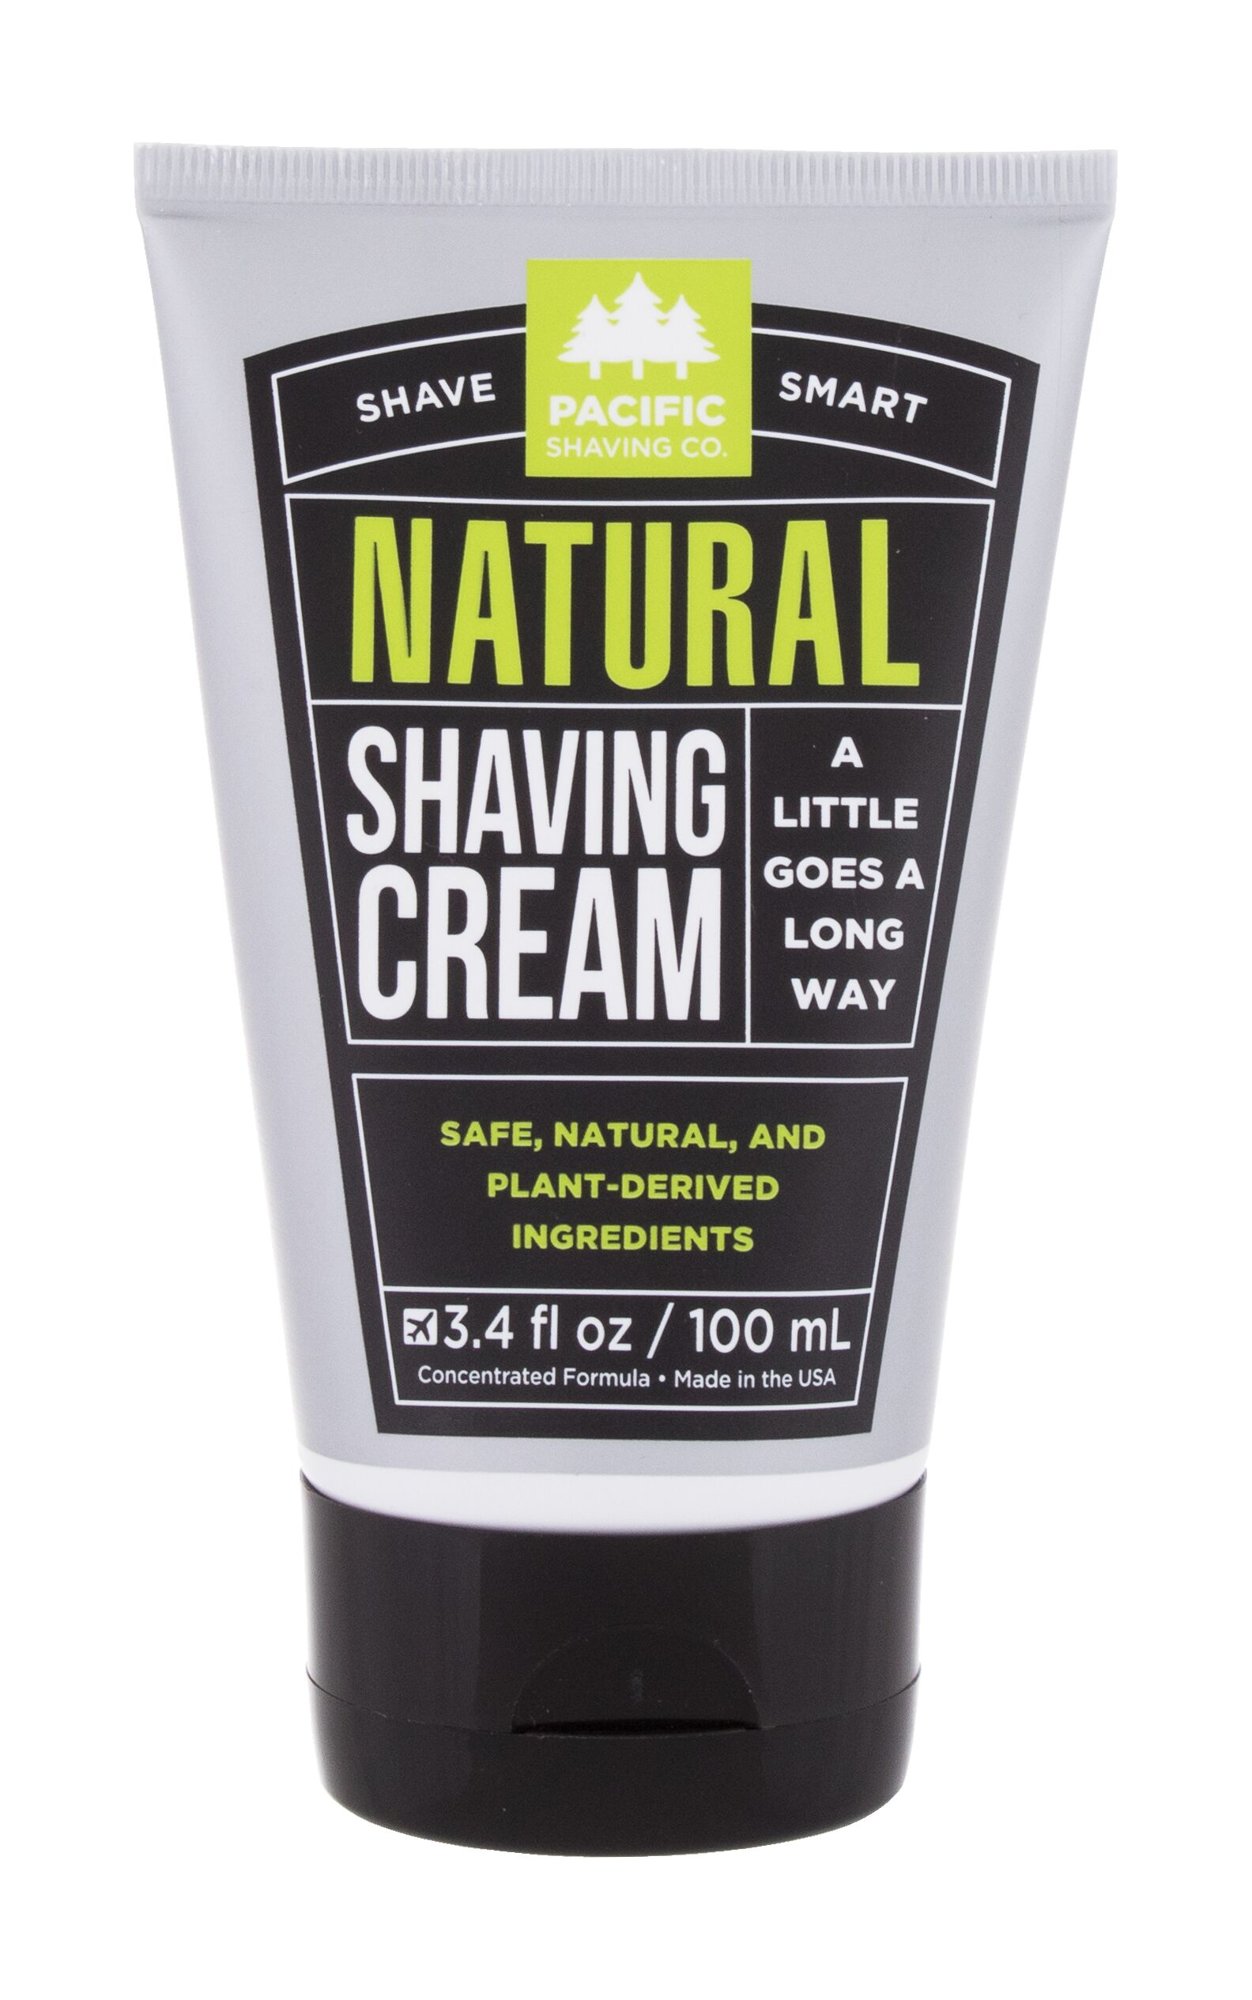 Pacific Shaving Co. Shave Smart Natural skutimosi kremas